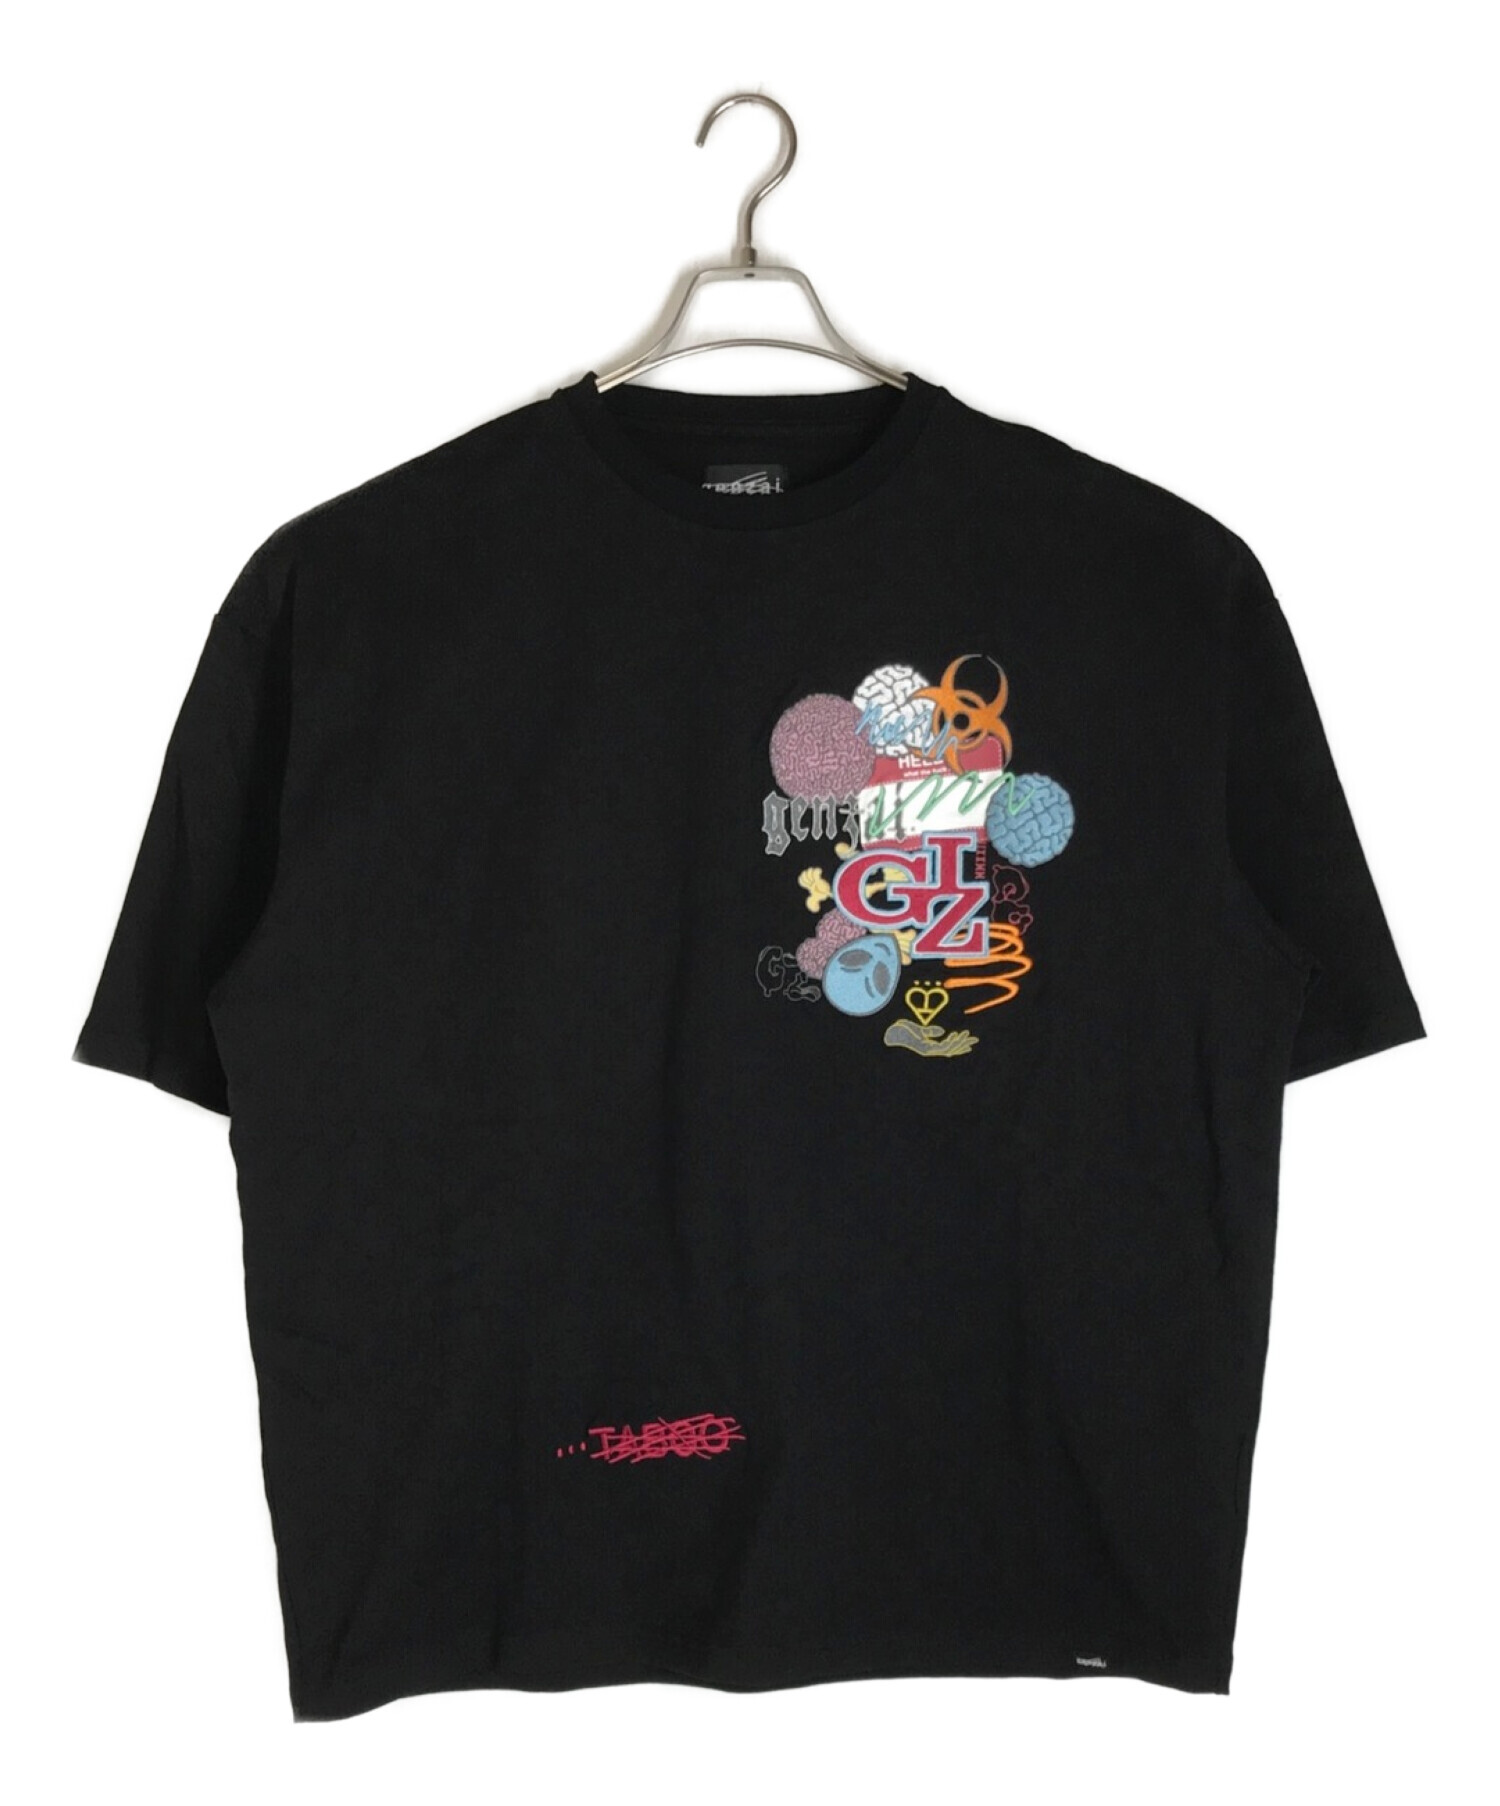 genzai (ゲンザイ) Tシャツ ブラック サイズ:XL